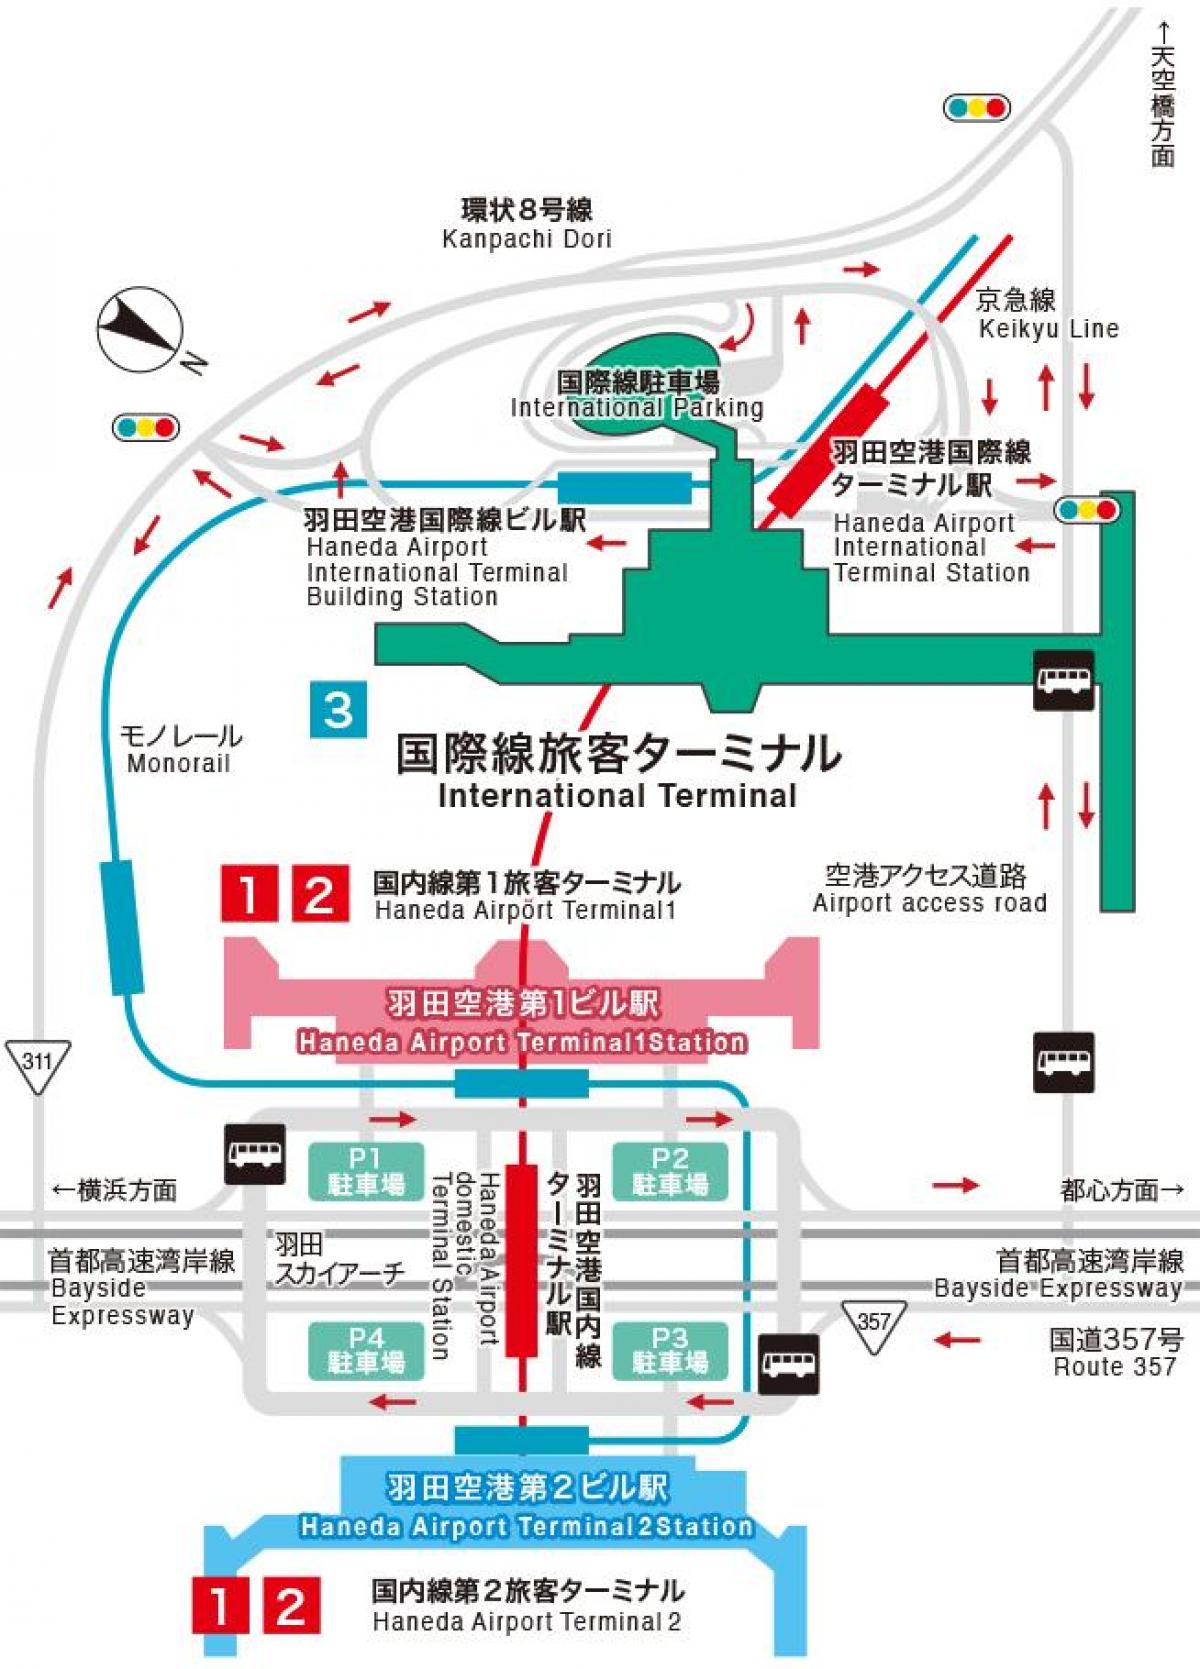 Tokyo airport terminal map